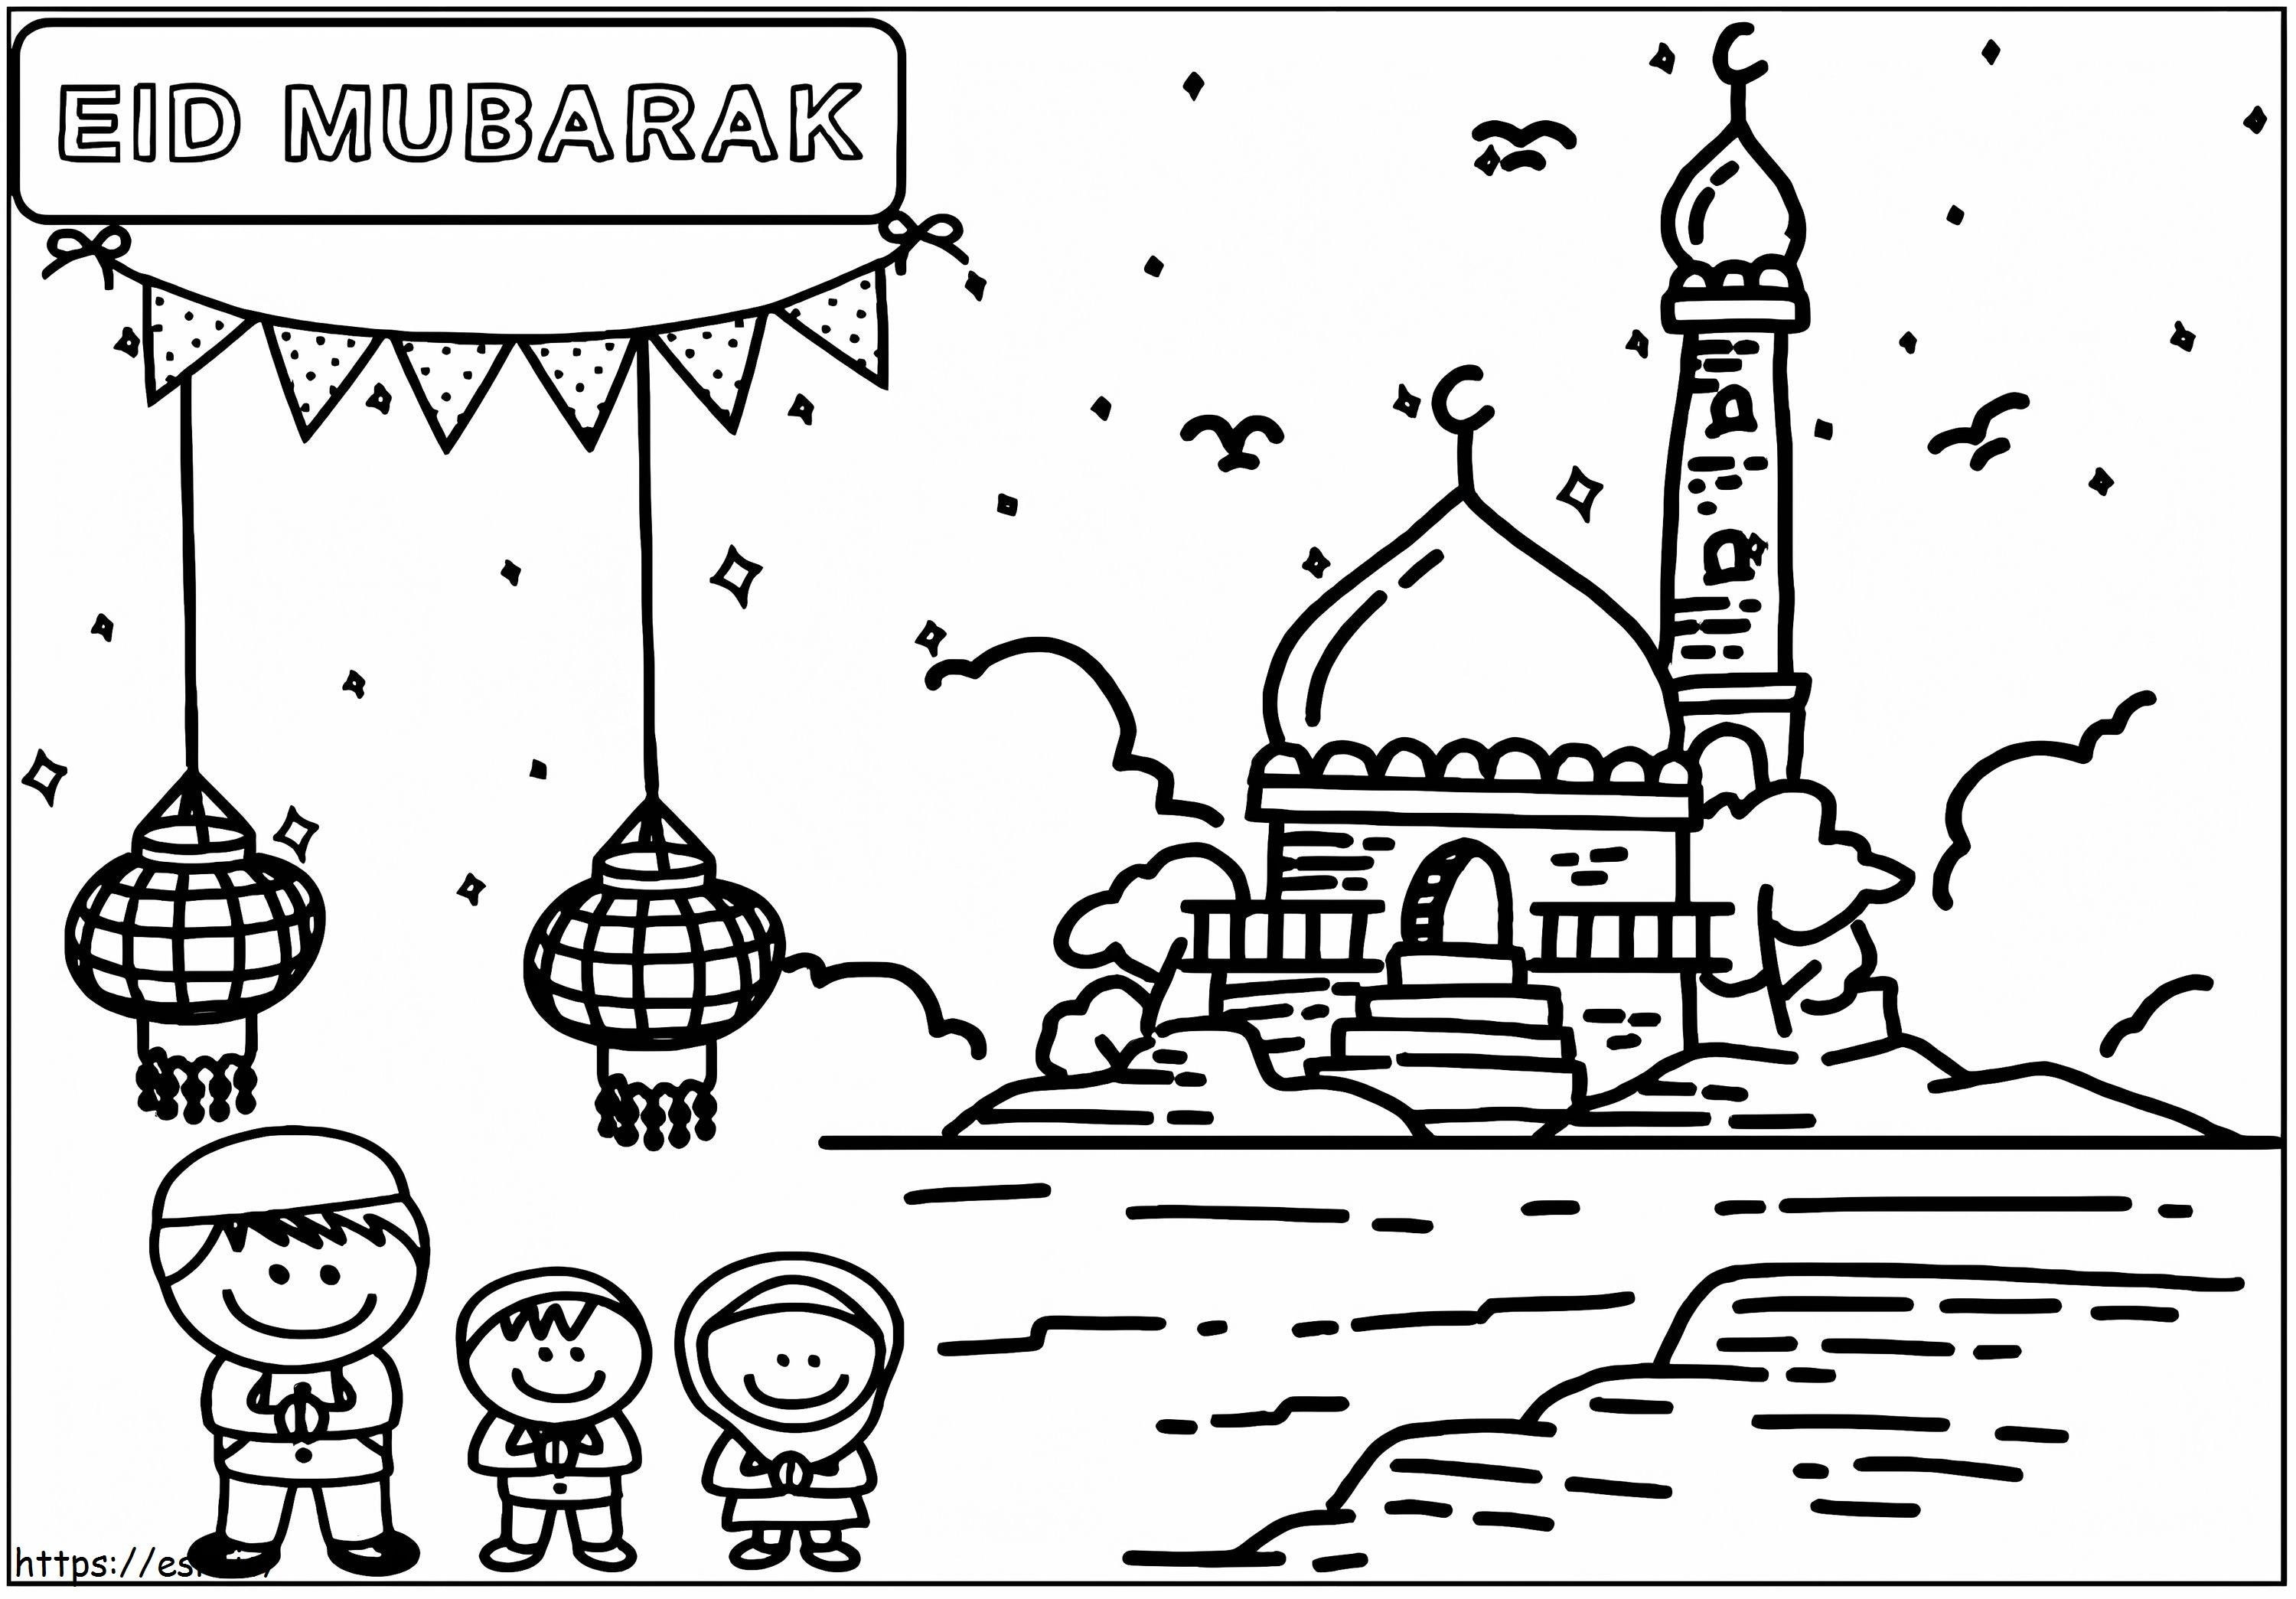 Eid Mubarak 5 ausmalbilder